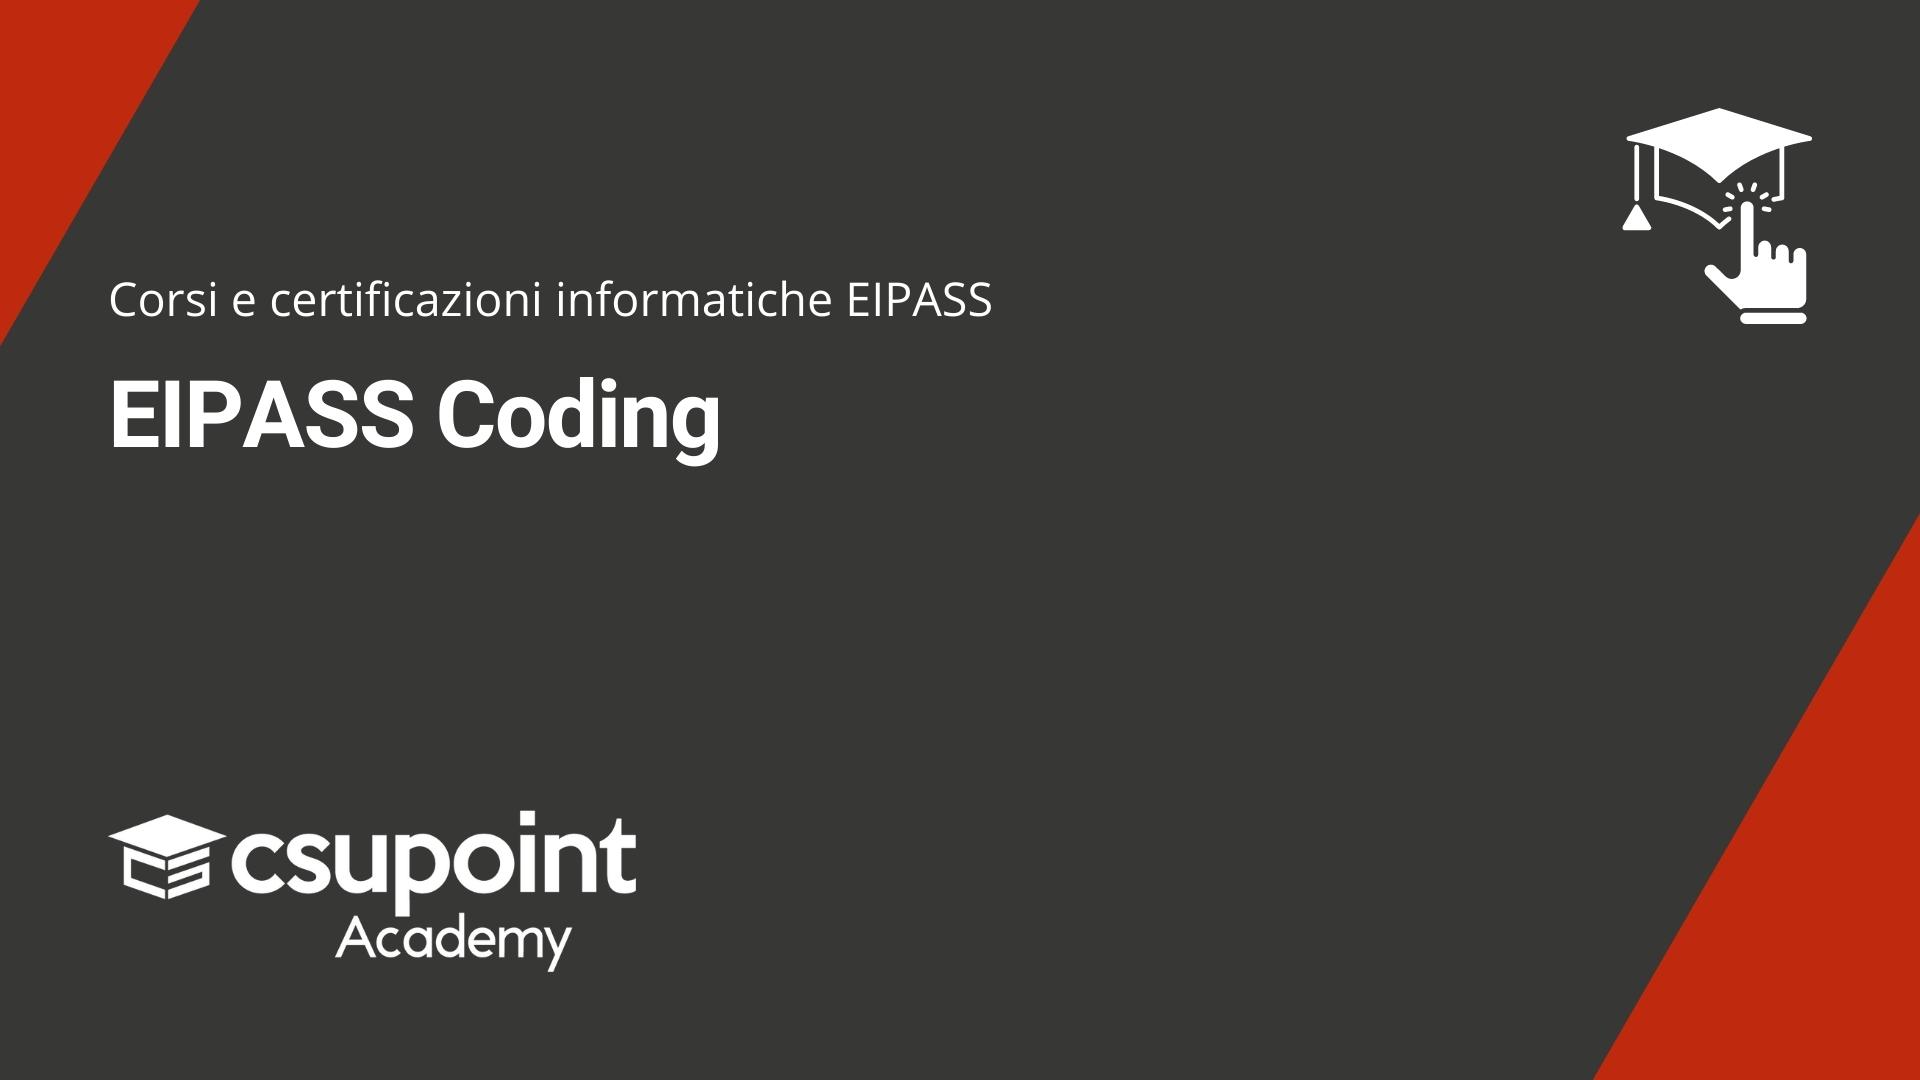 EIPASS Coding